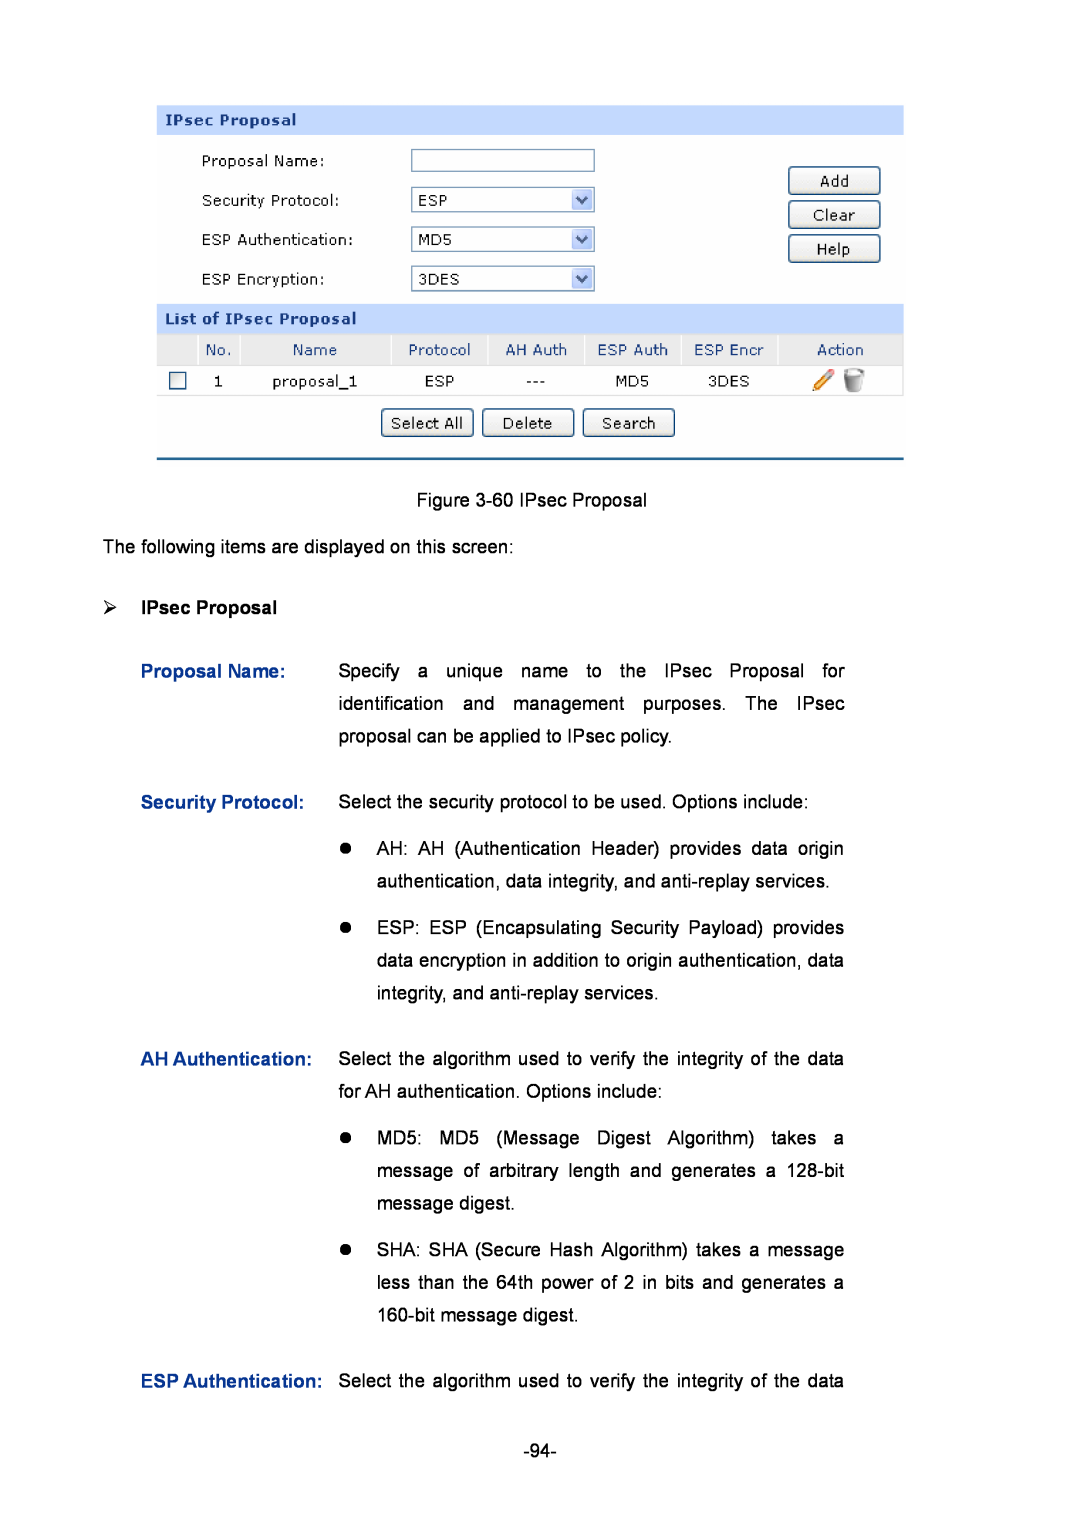 TP-Link TL-ER6120 manual ¾ IPsec Proposal 